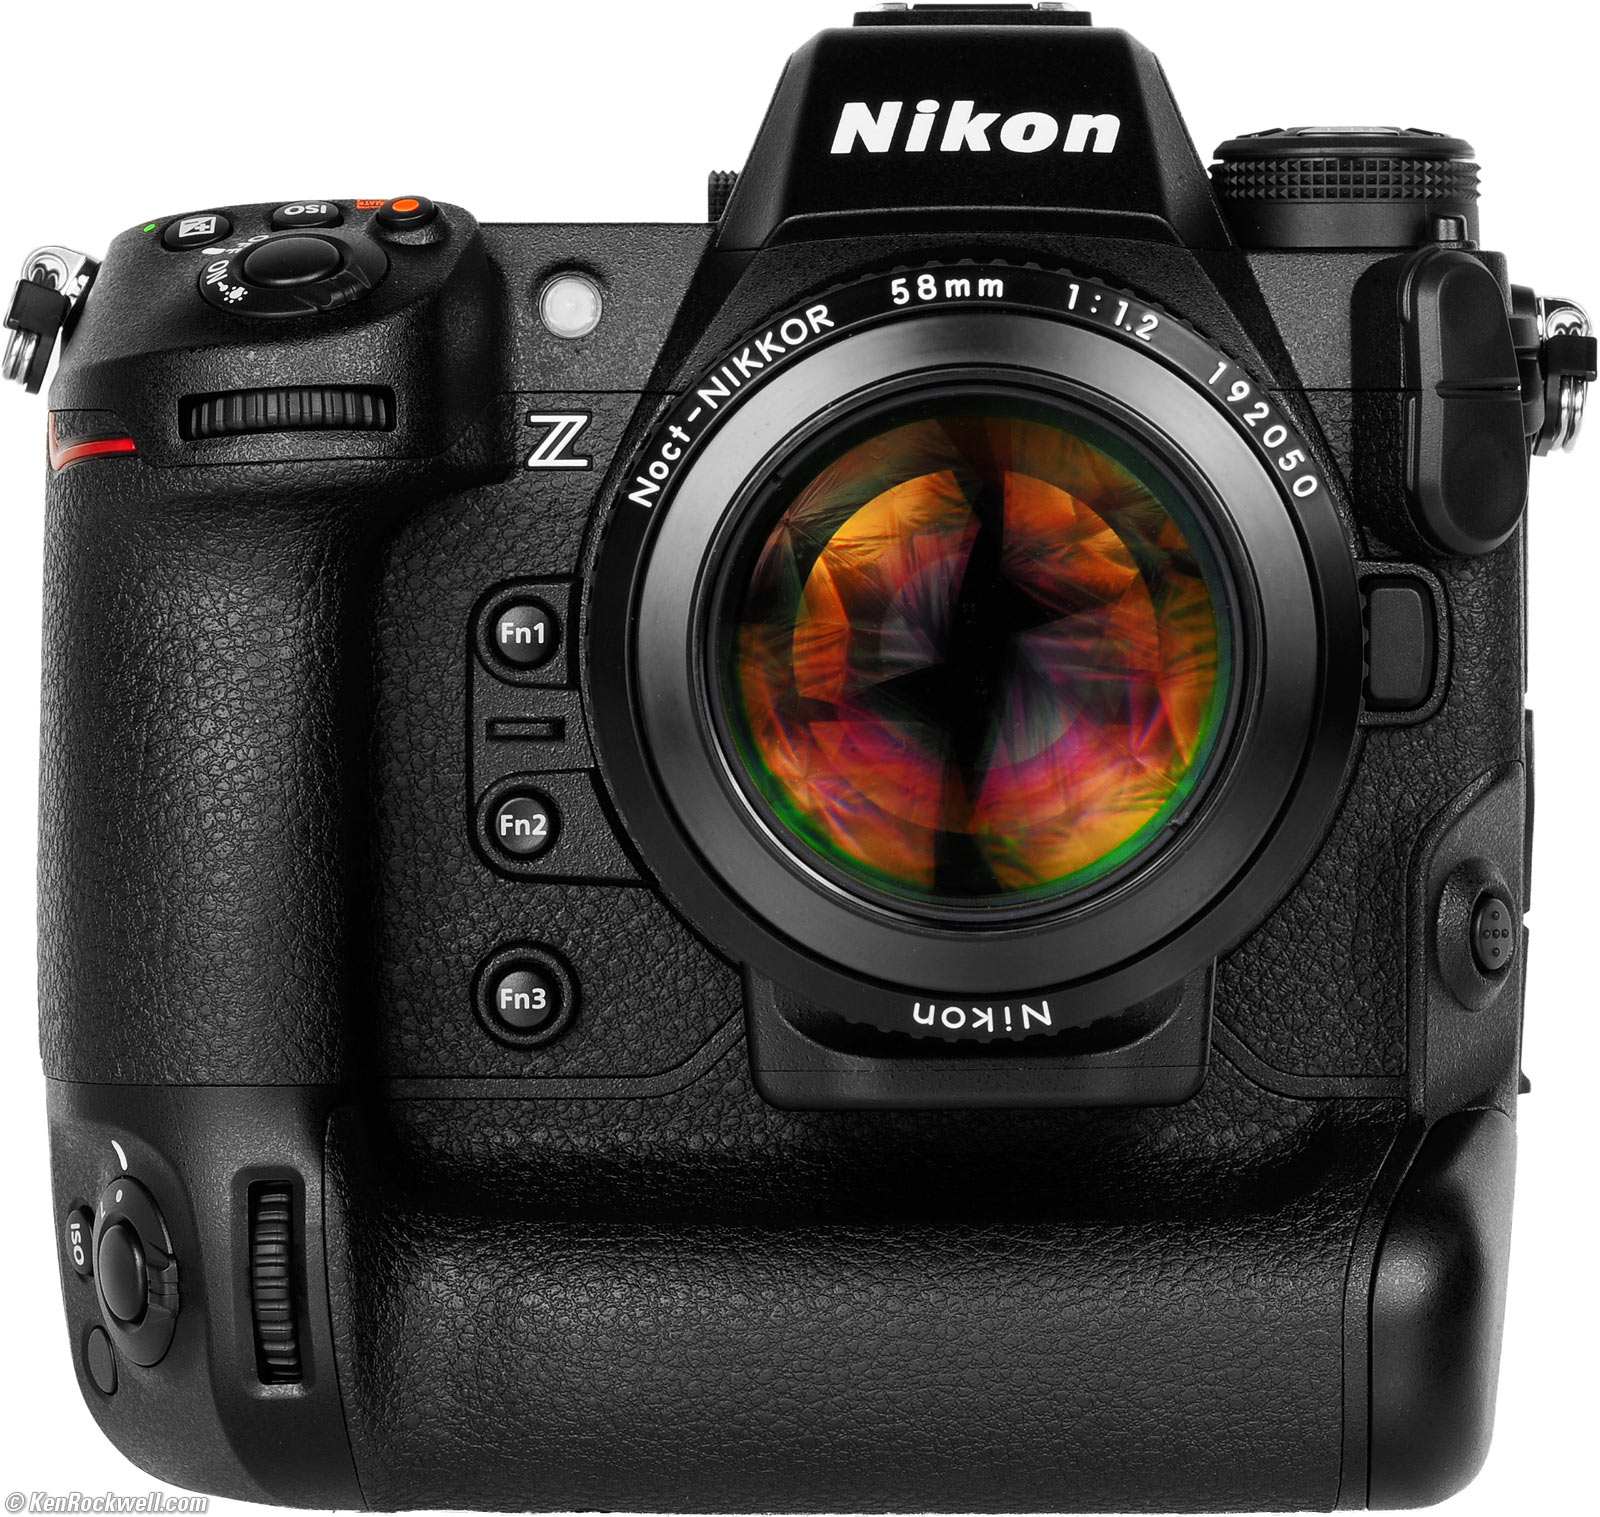 Nikon Z9 Field Report - Squiver